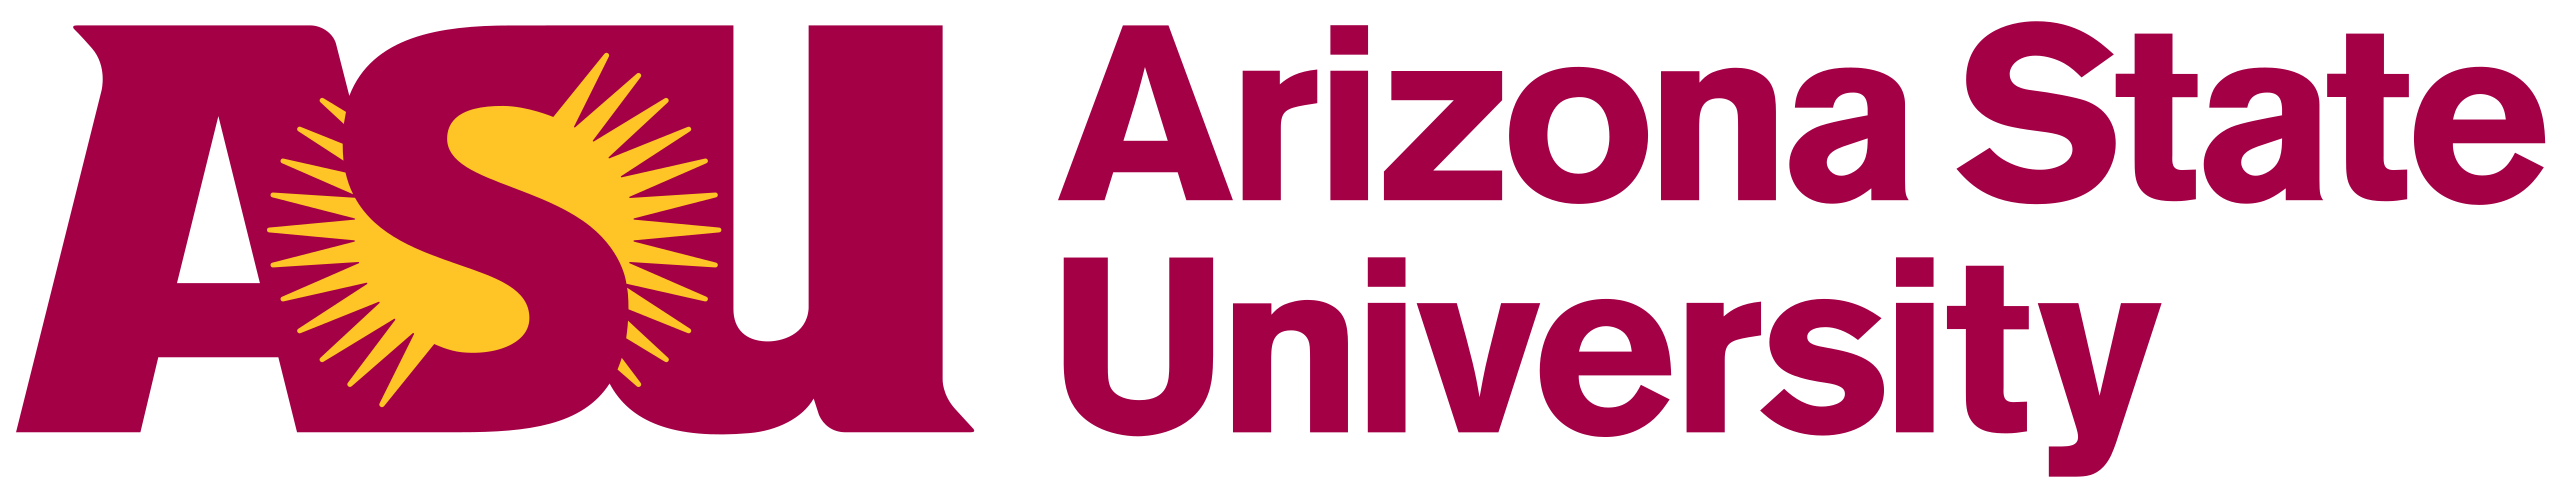 logo for Arizona State University